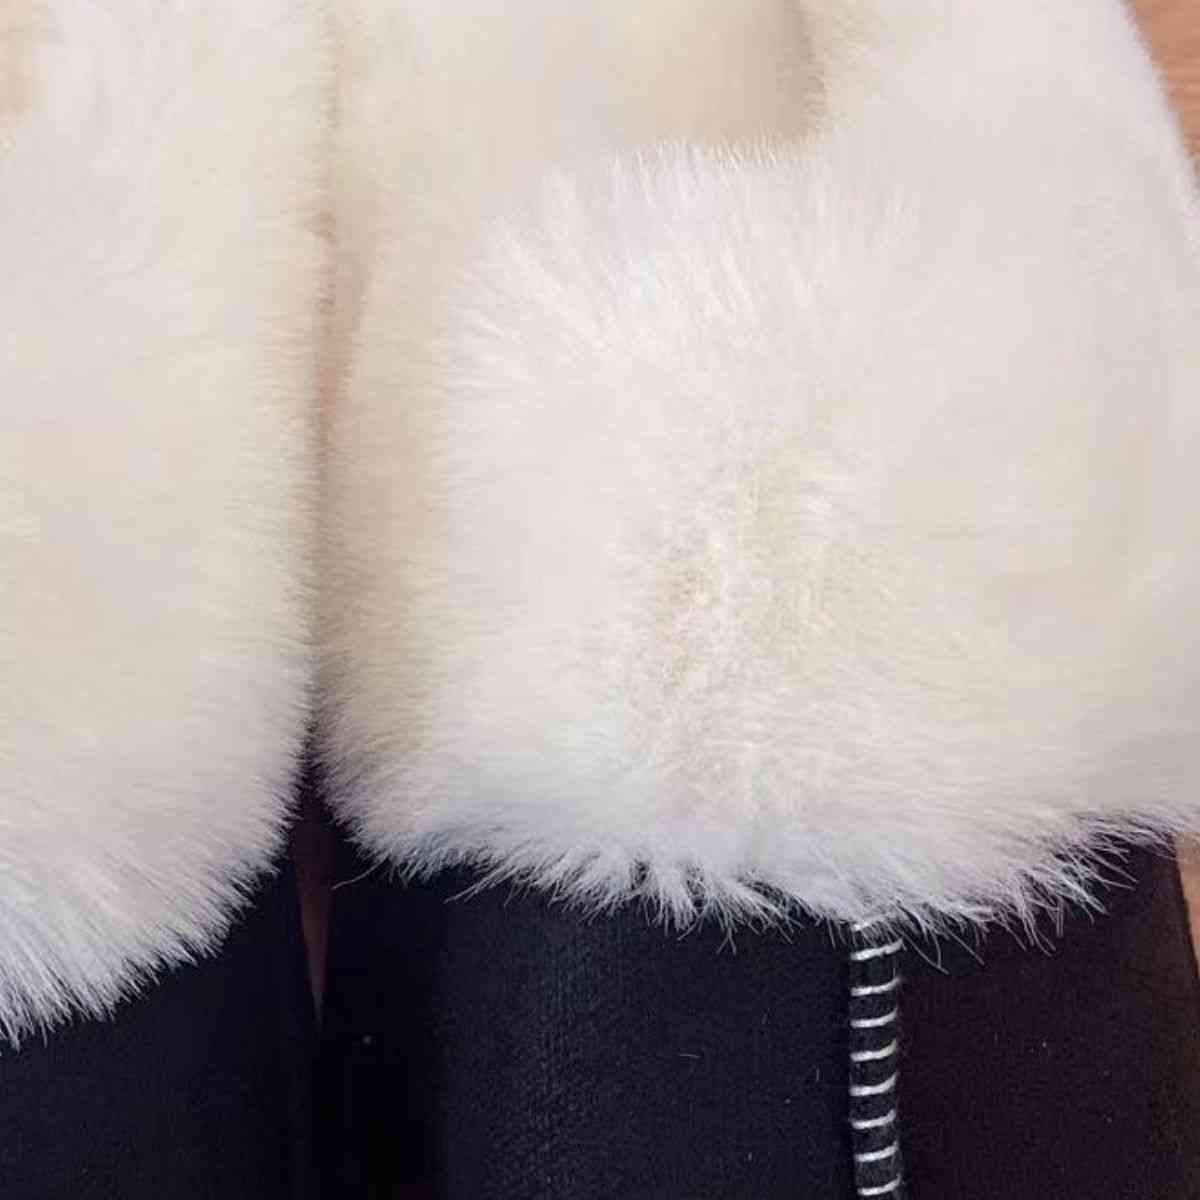 Comfortable black and white Trendsi vegan suede center seam slippers.